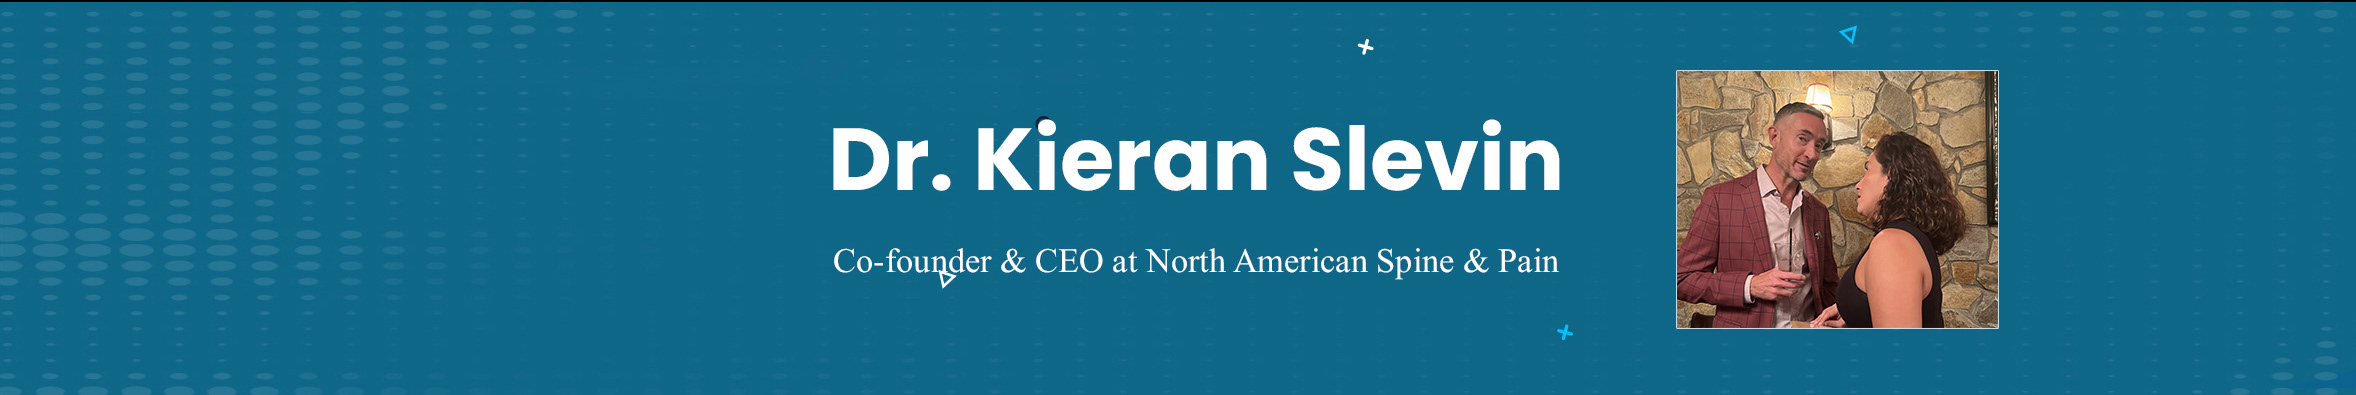 Dr. Kieran Slevin's profile banner